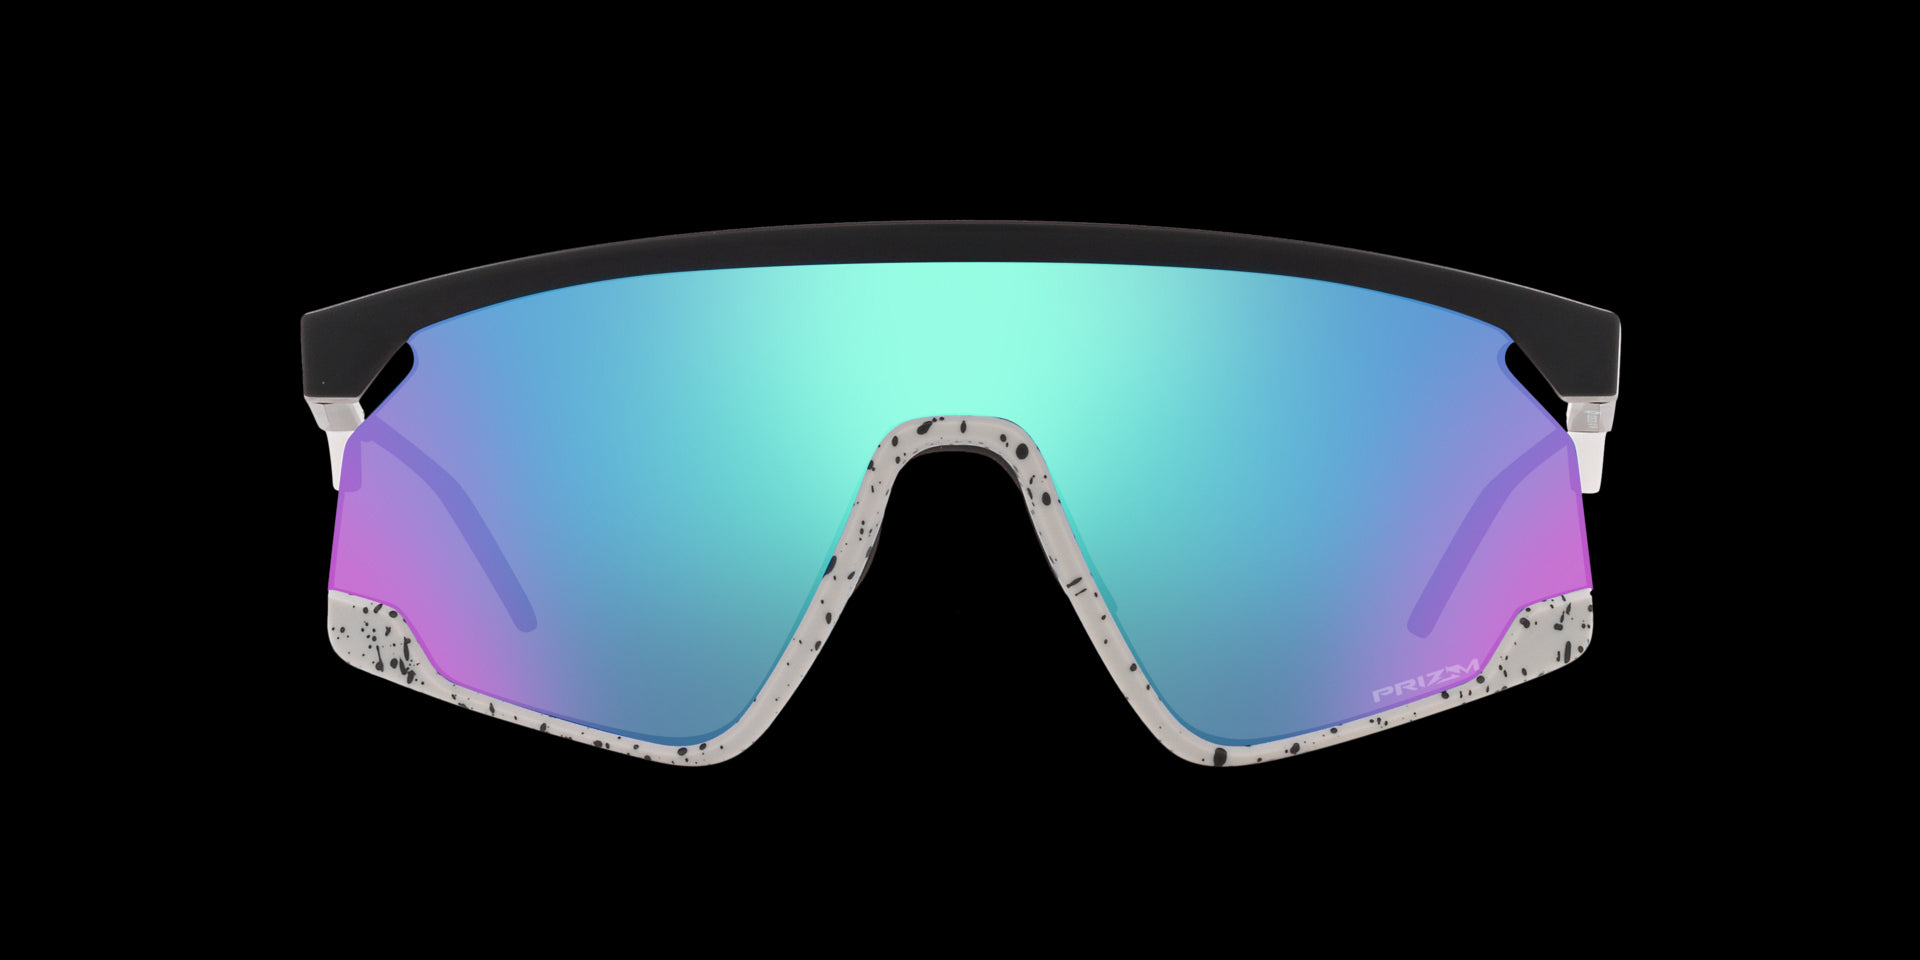 Blue/black BXTR sunglasses